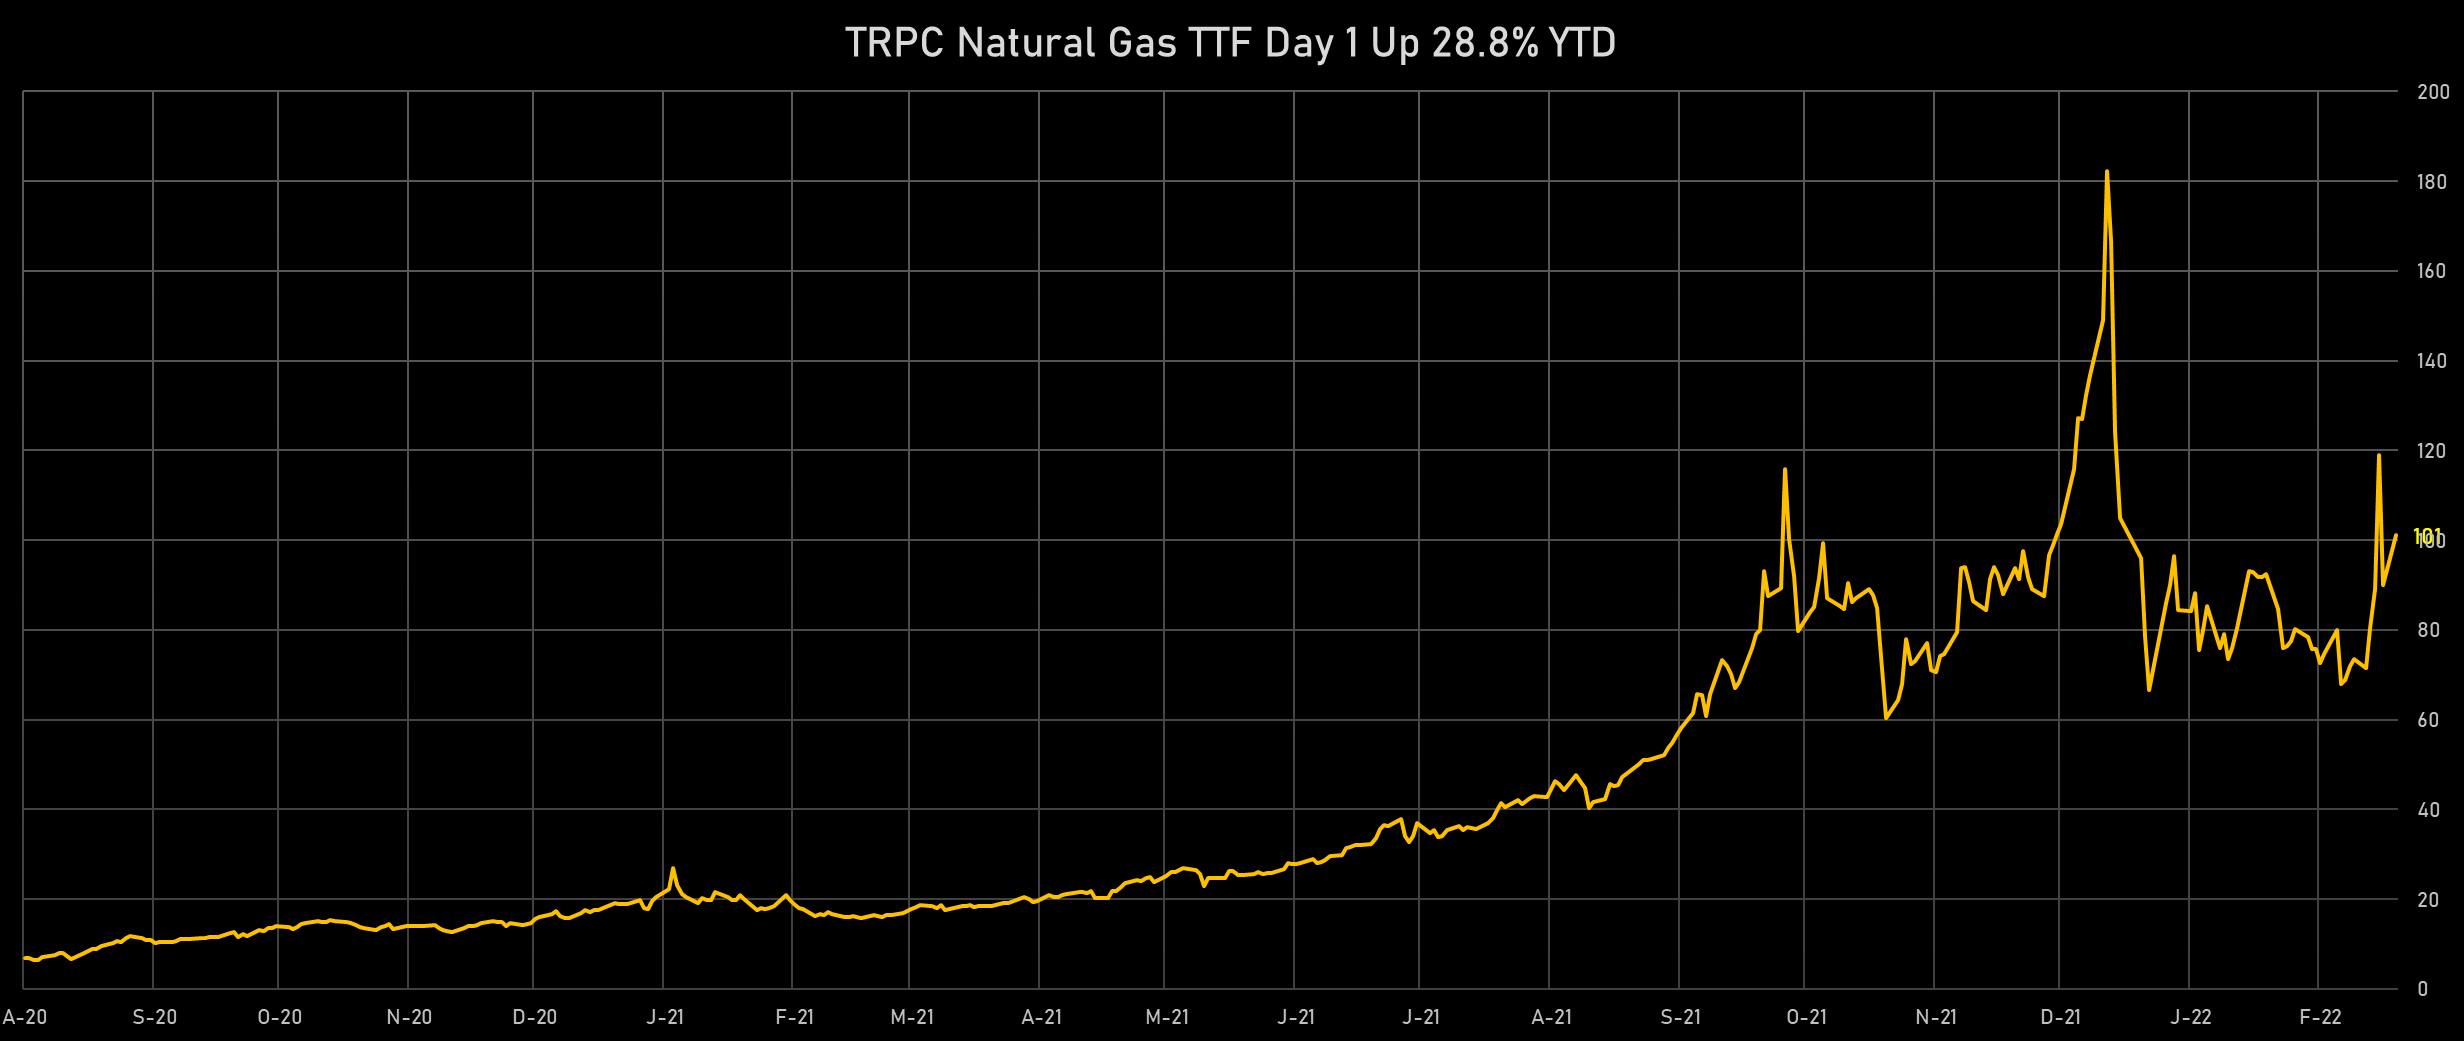 TTF Natural Gas Prices | Sources: phipost.com, Refinitiv data